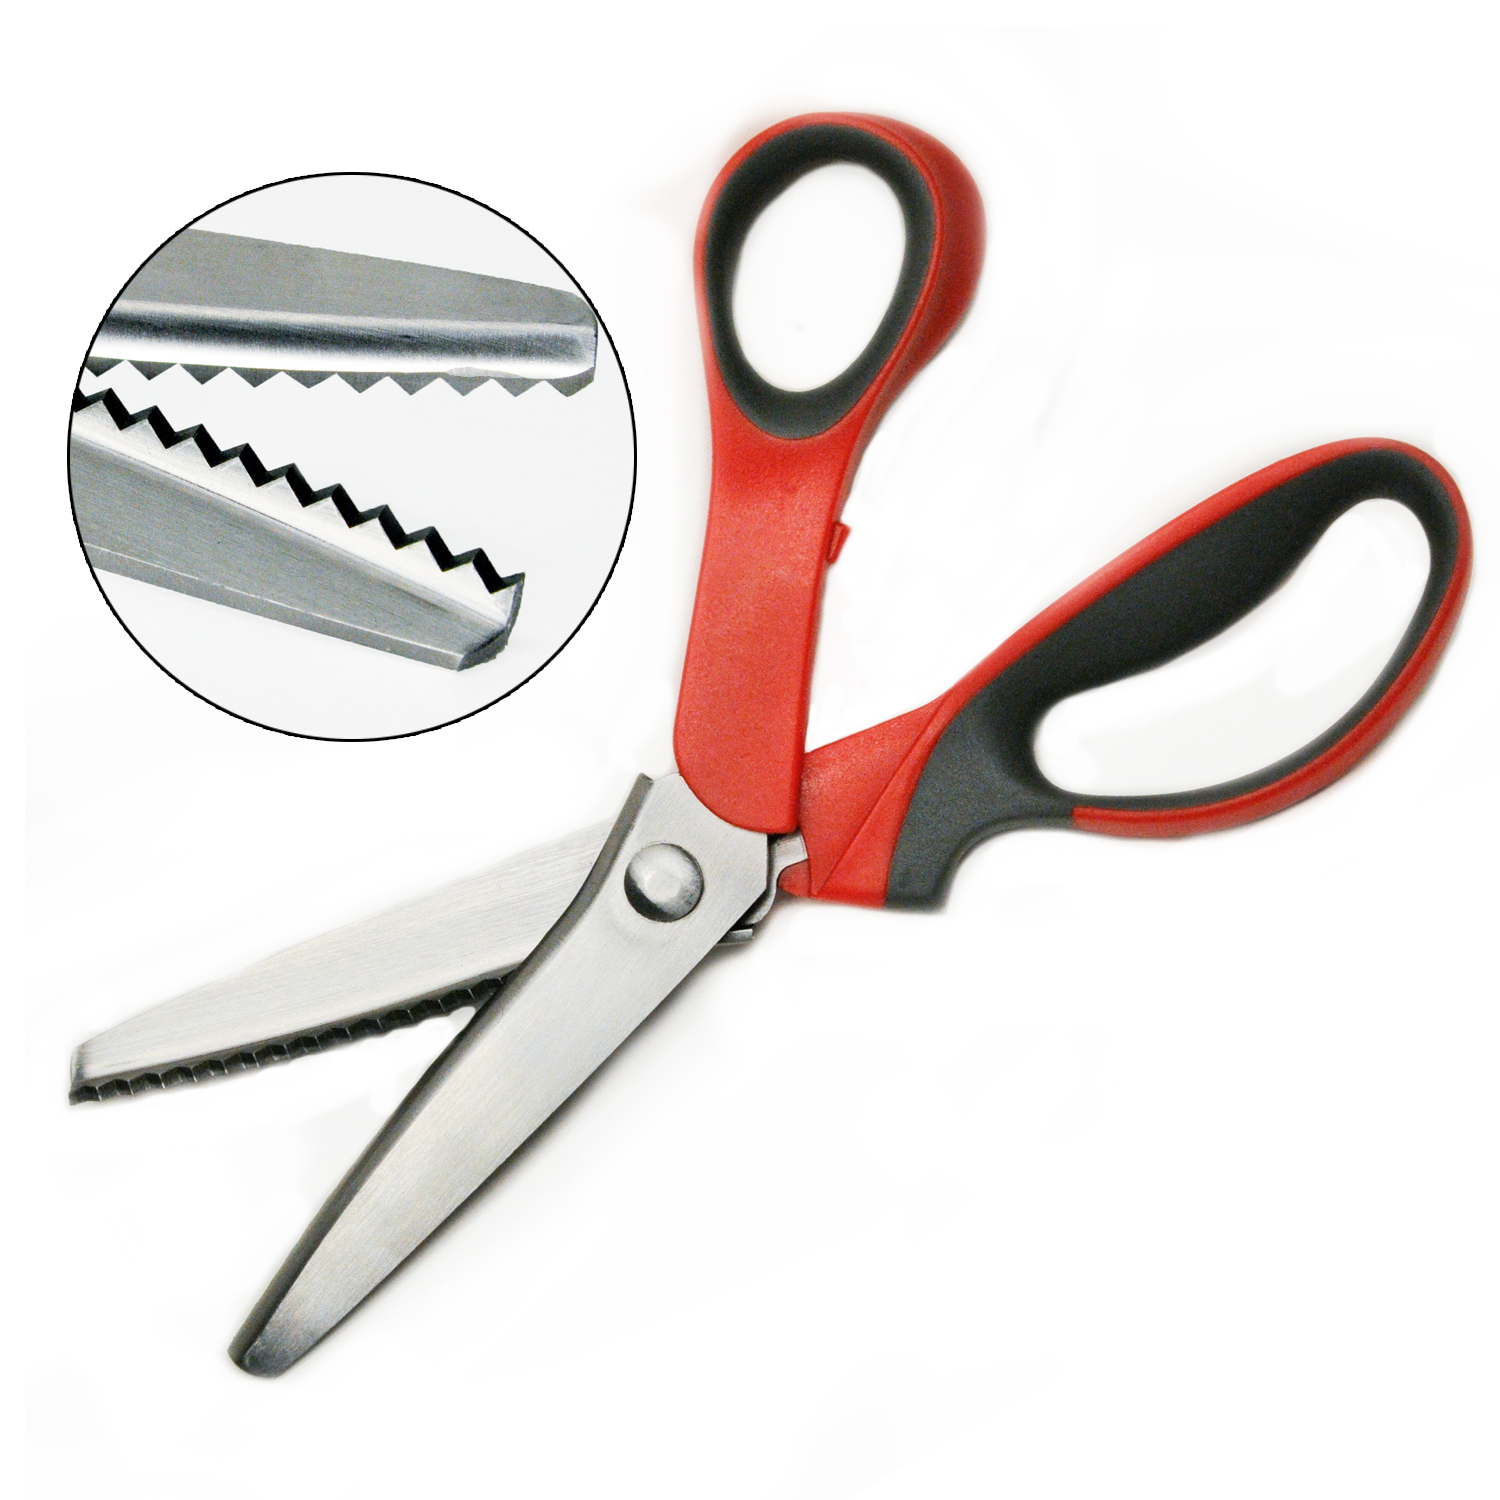 Pinking Shears Bulk - Fabric Scissors with zig-zag pattern - Sullivans USA